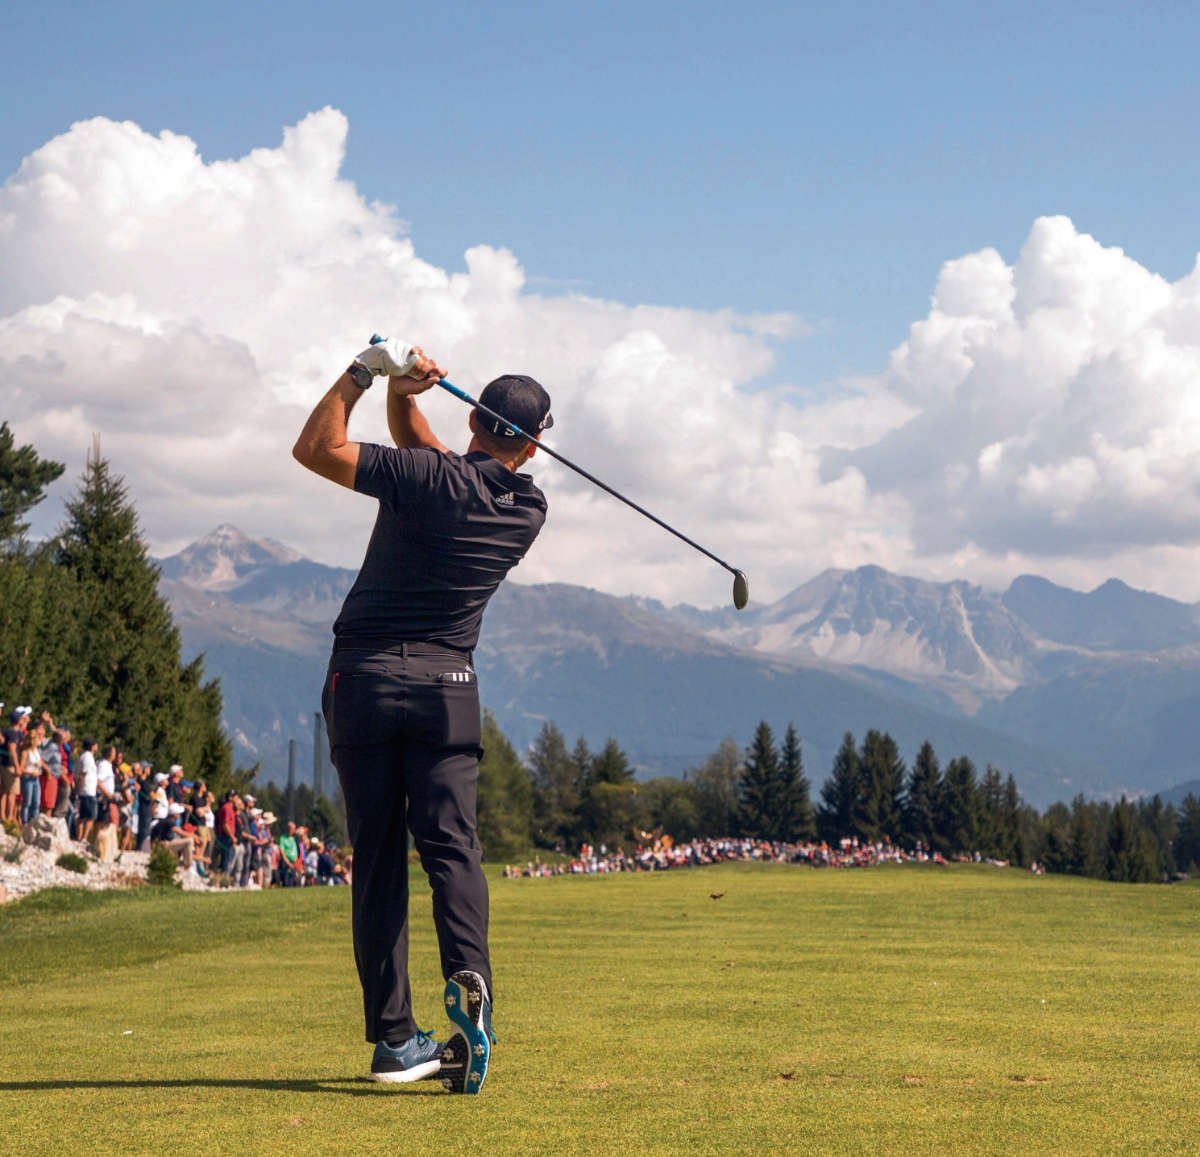 Europe’s Longest-running Golf Tournament Returns In 2021: Omega Masters Crans Montana